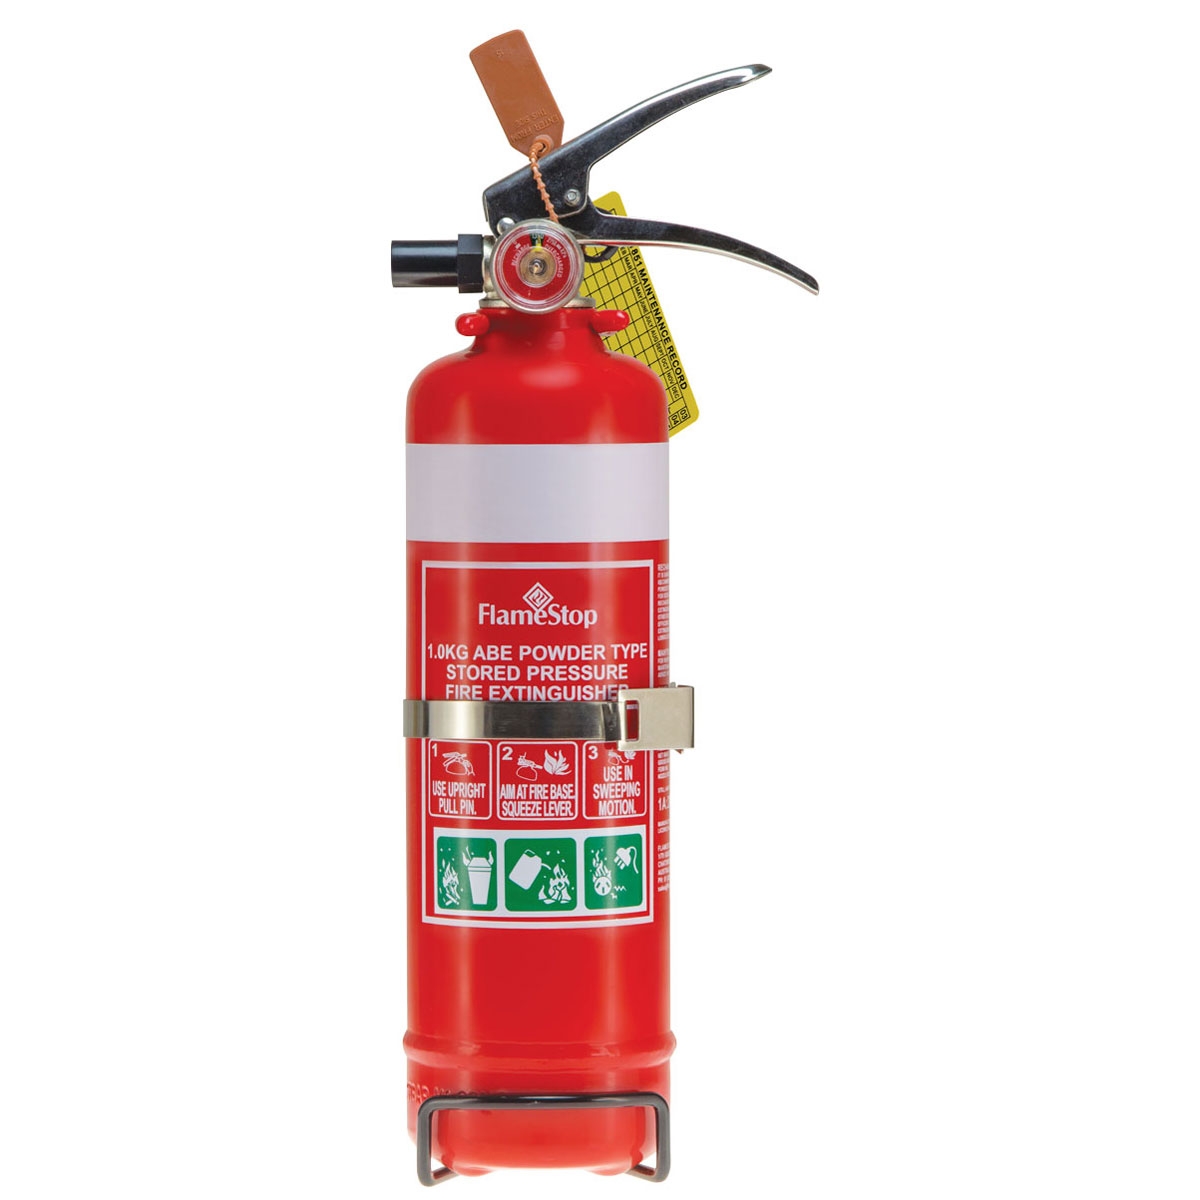 FlameStop 1.0kg ABE Powder Type Portable Fire Extinguisher